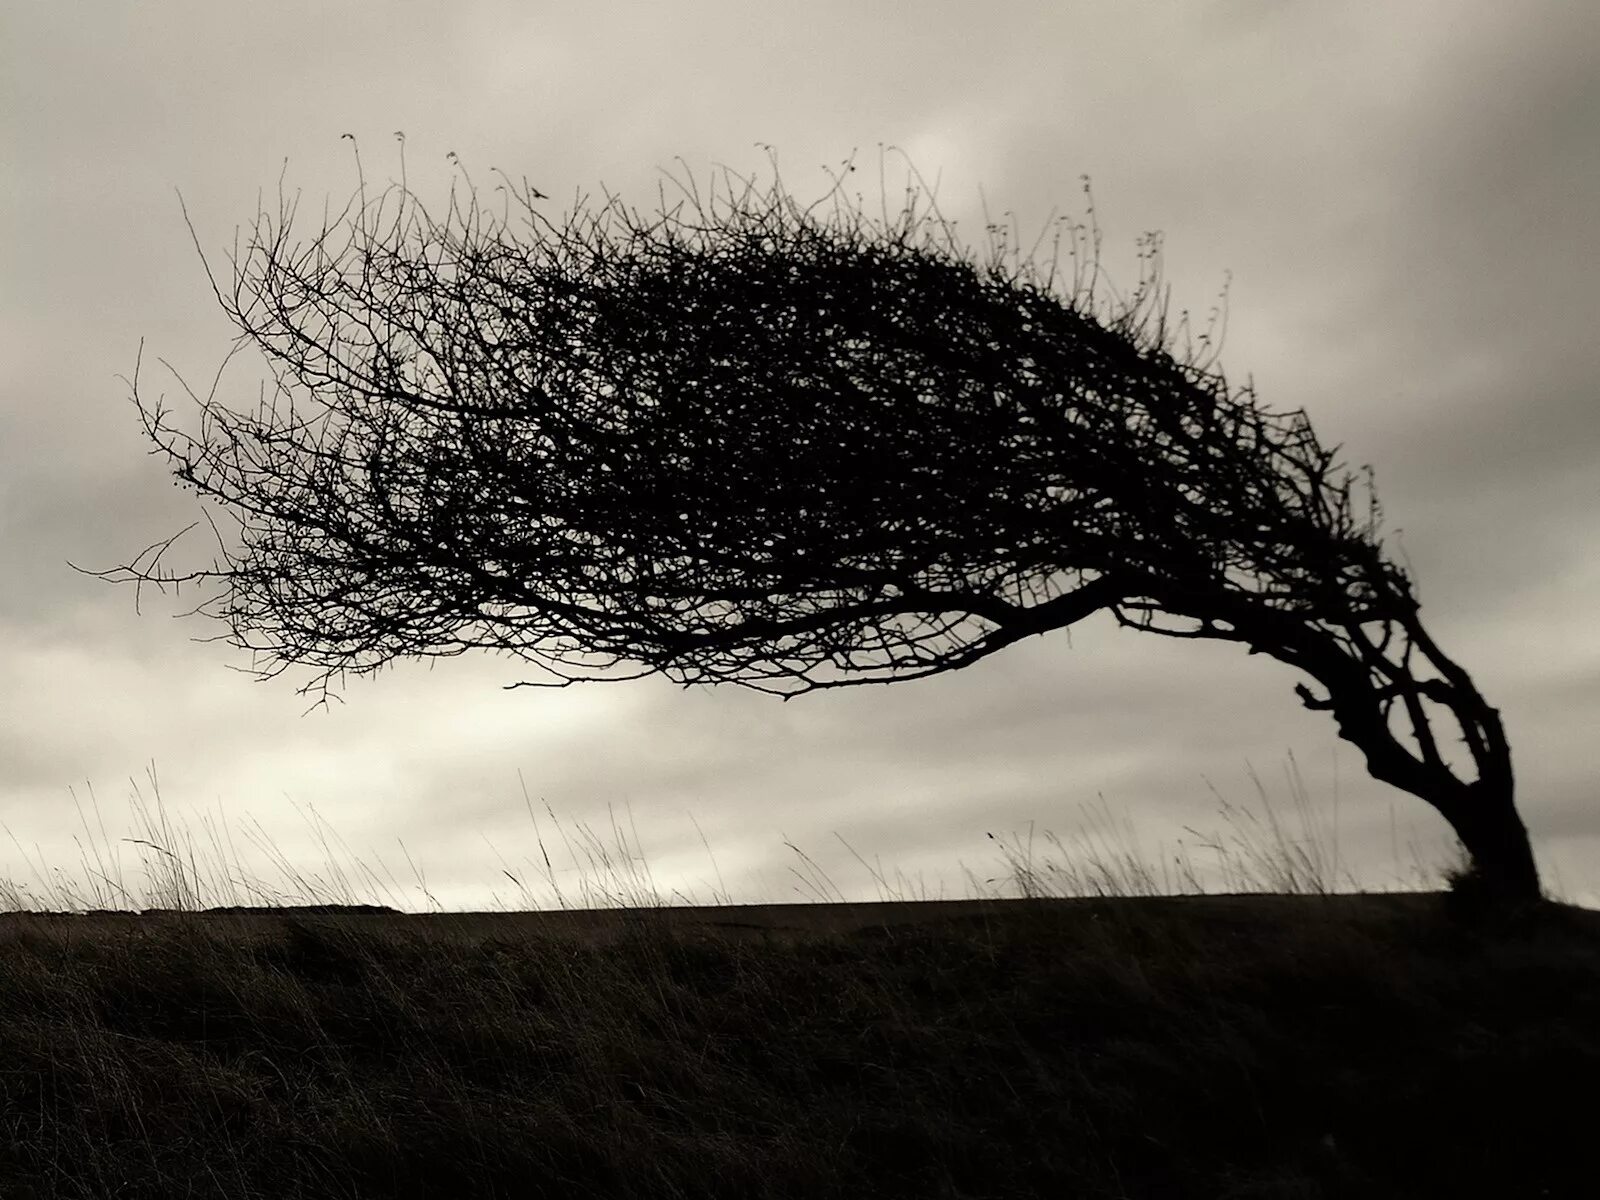 Дерево на ветру. Наклоненное дерево. Одинокое дерево на ветру. Дерево под ветром.